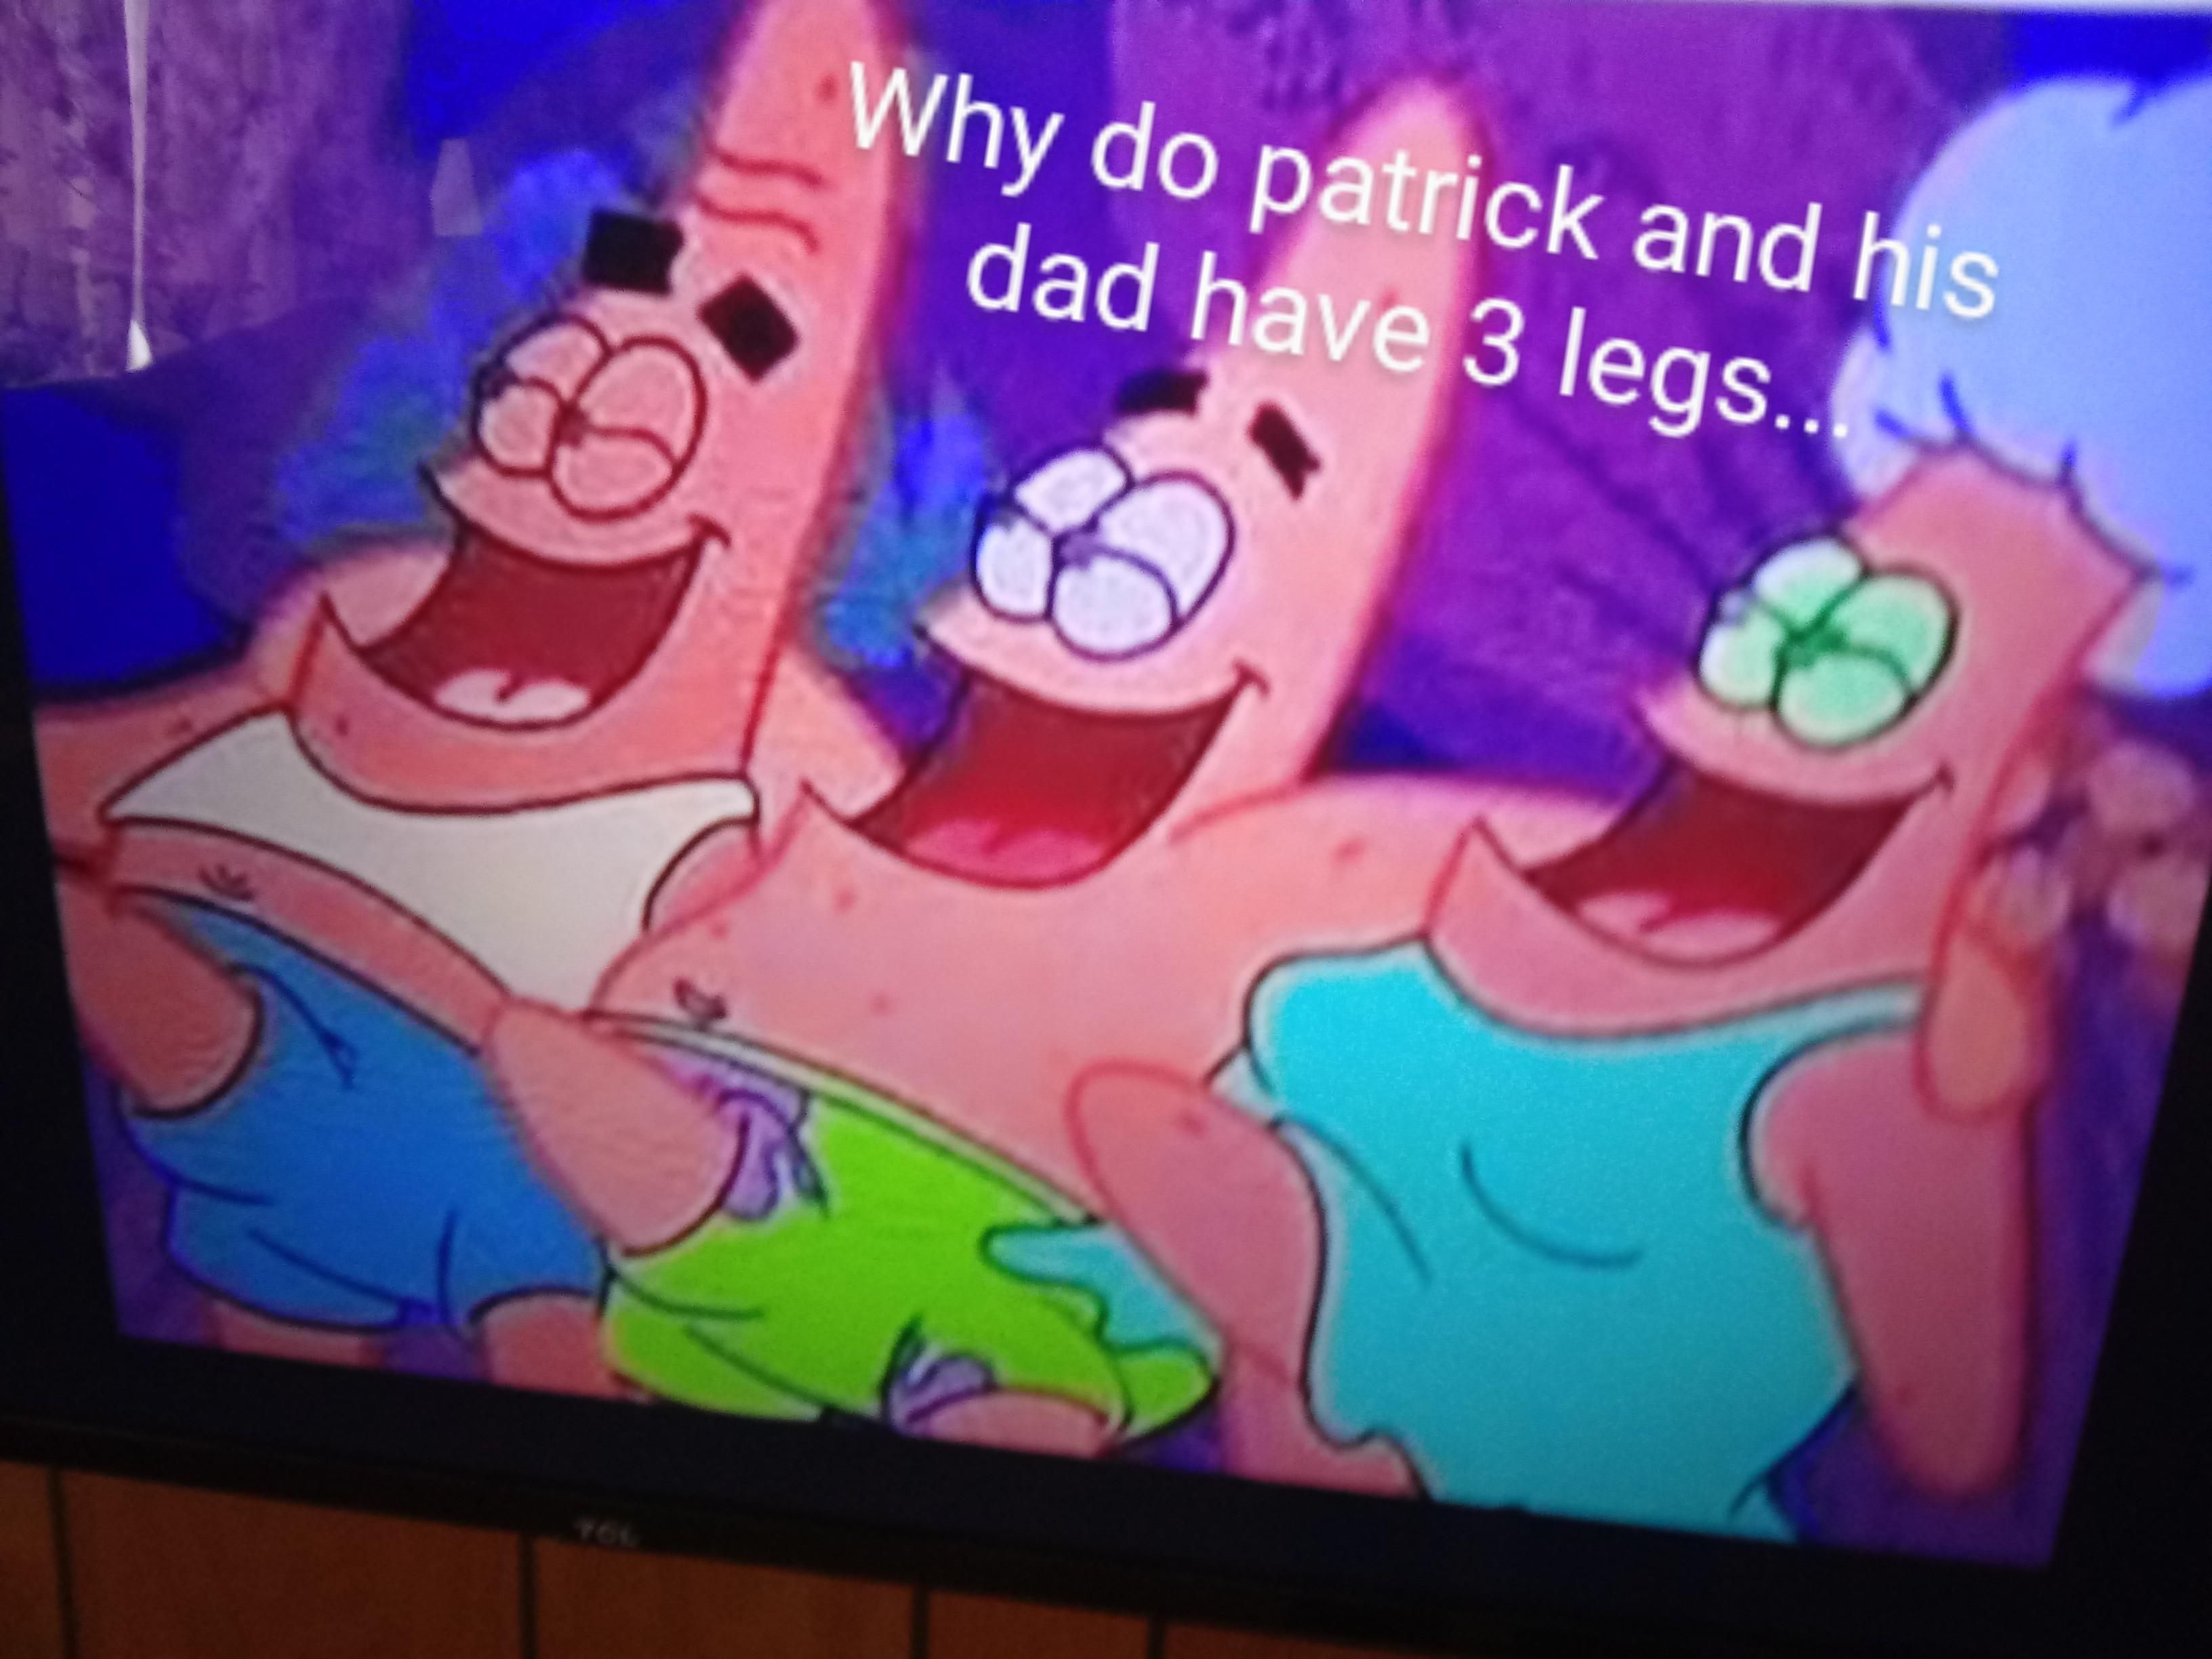 Patrick is a tripod